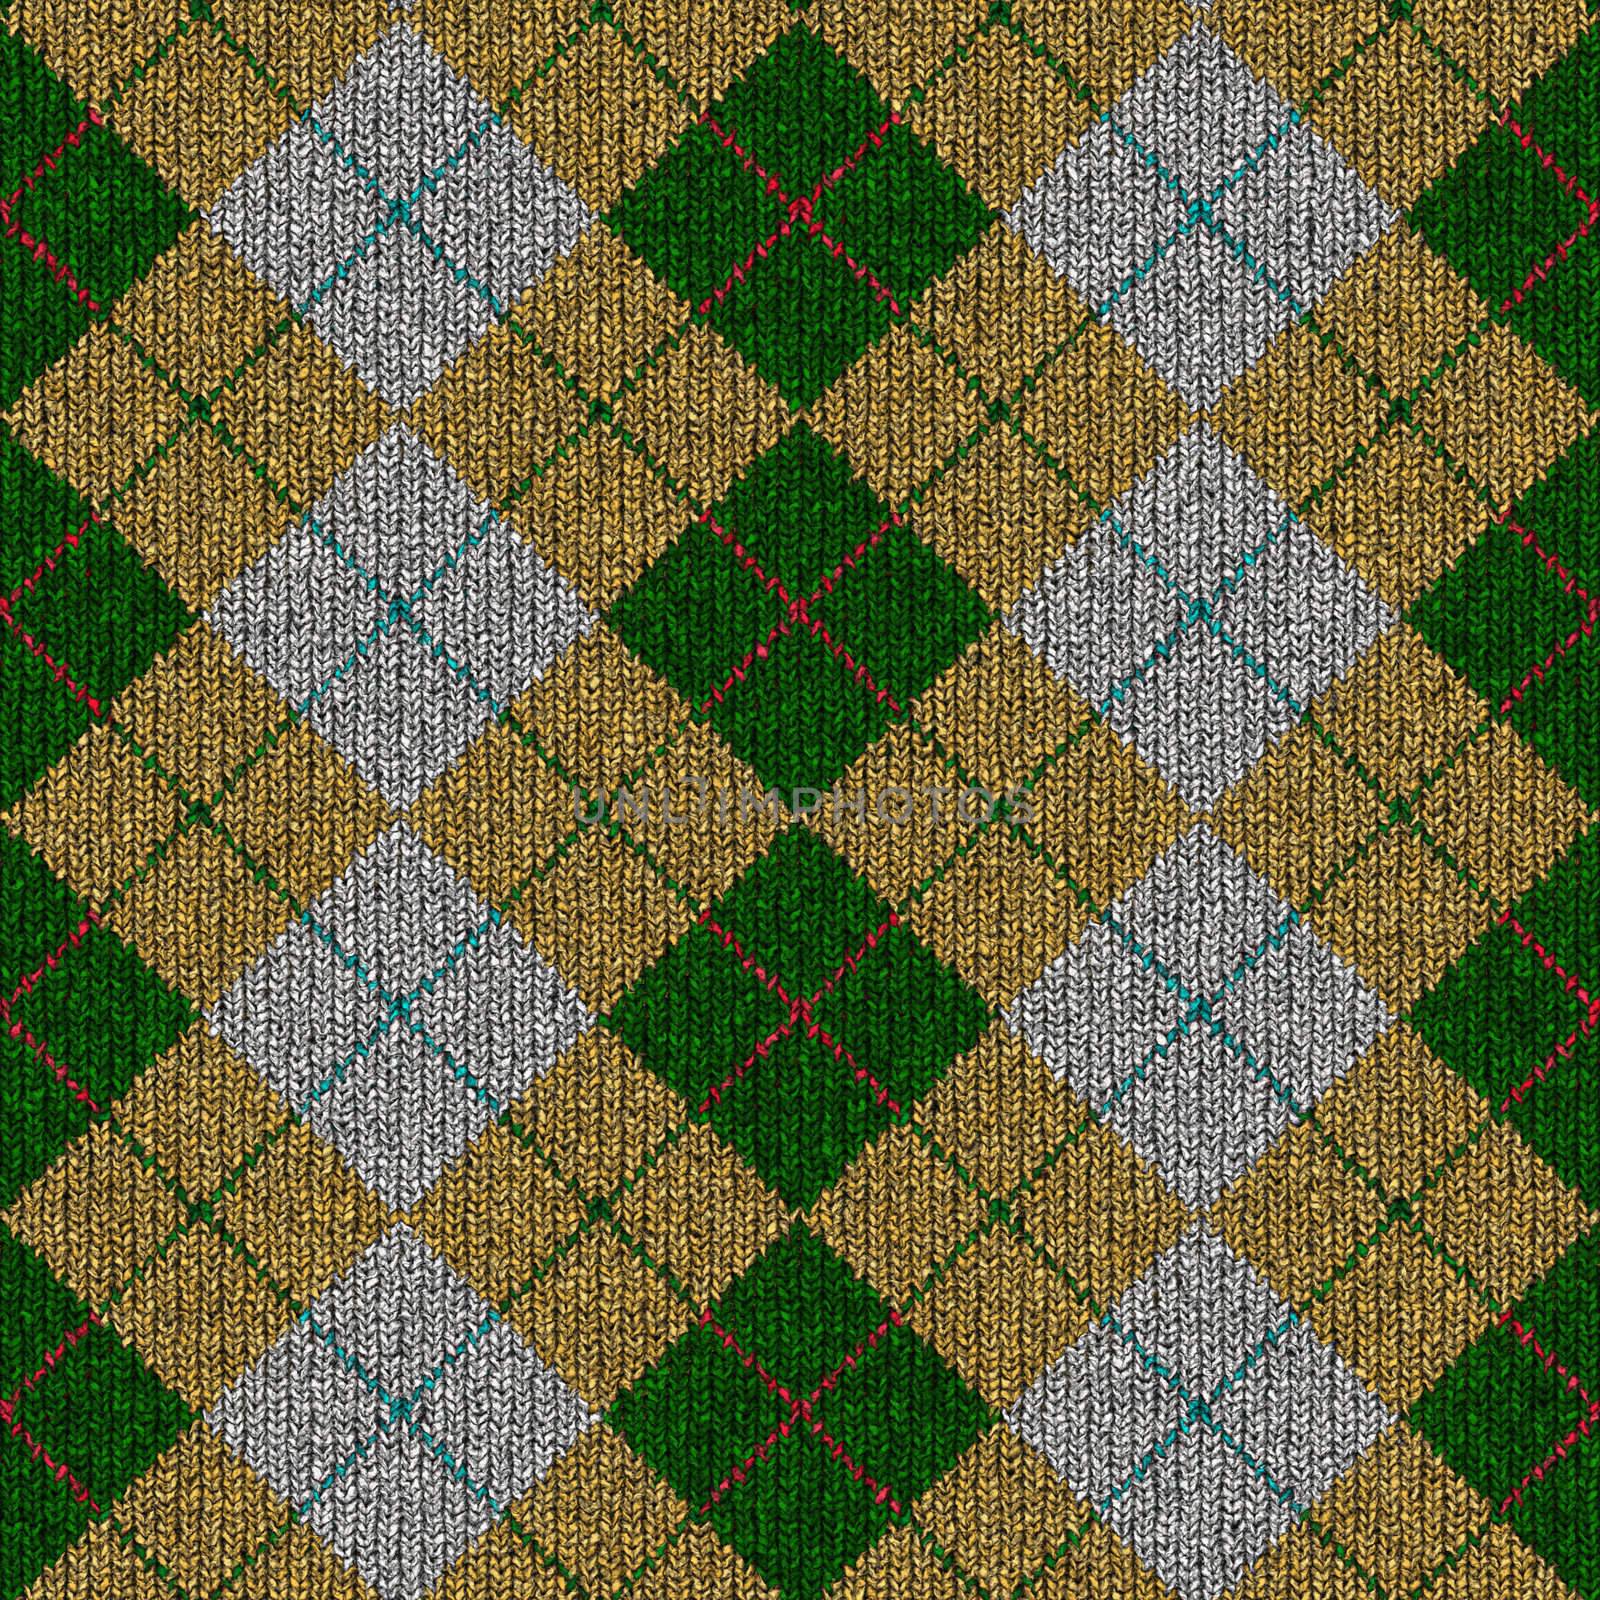  green, yellow, grey tartan knitwork pattern by weknow